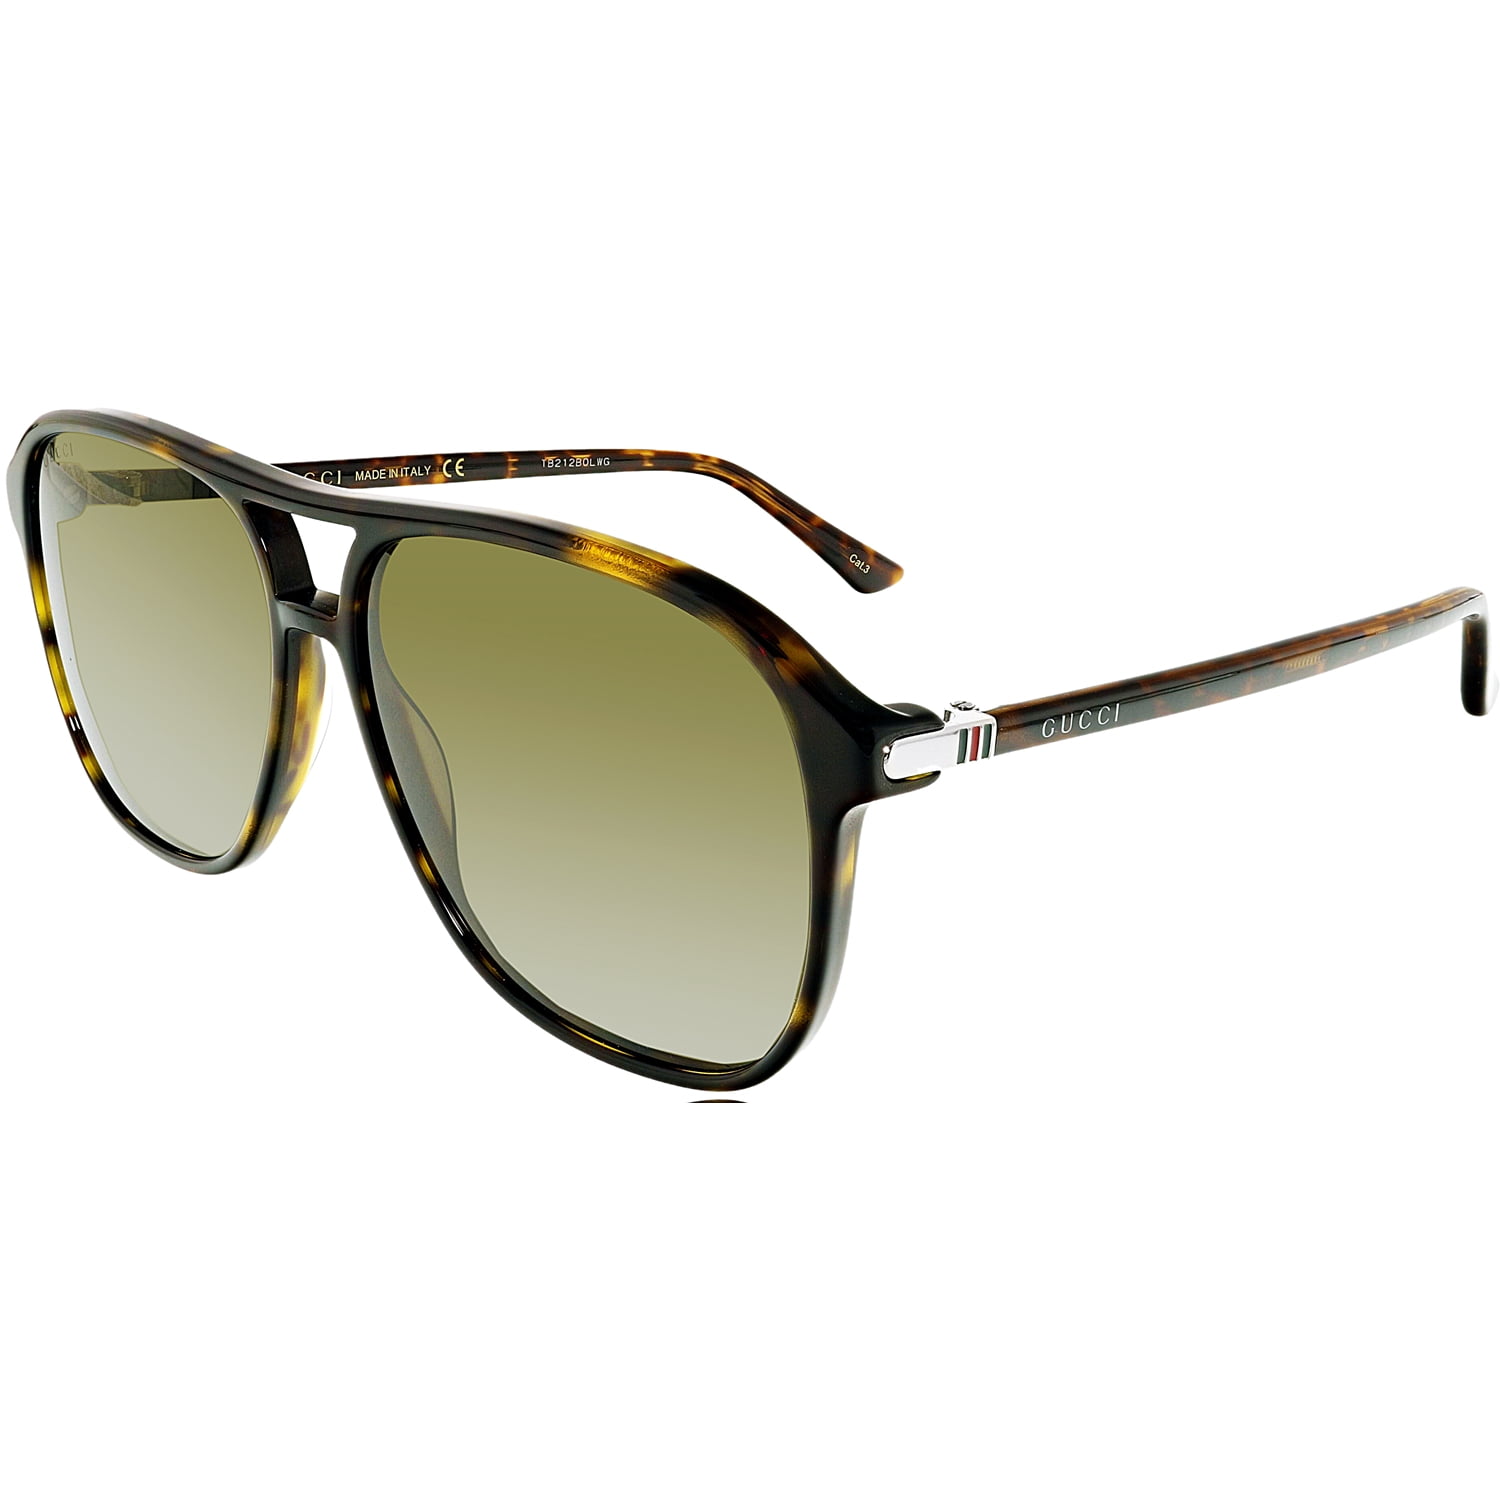 Gucci GG0016S-003-58 Brown Aviator Sunglasses | Walmart Canada